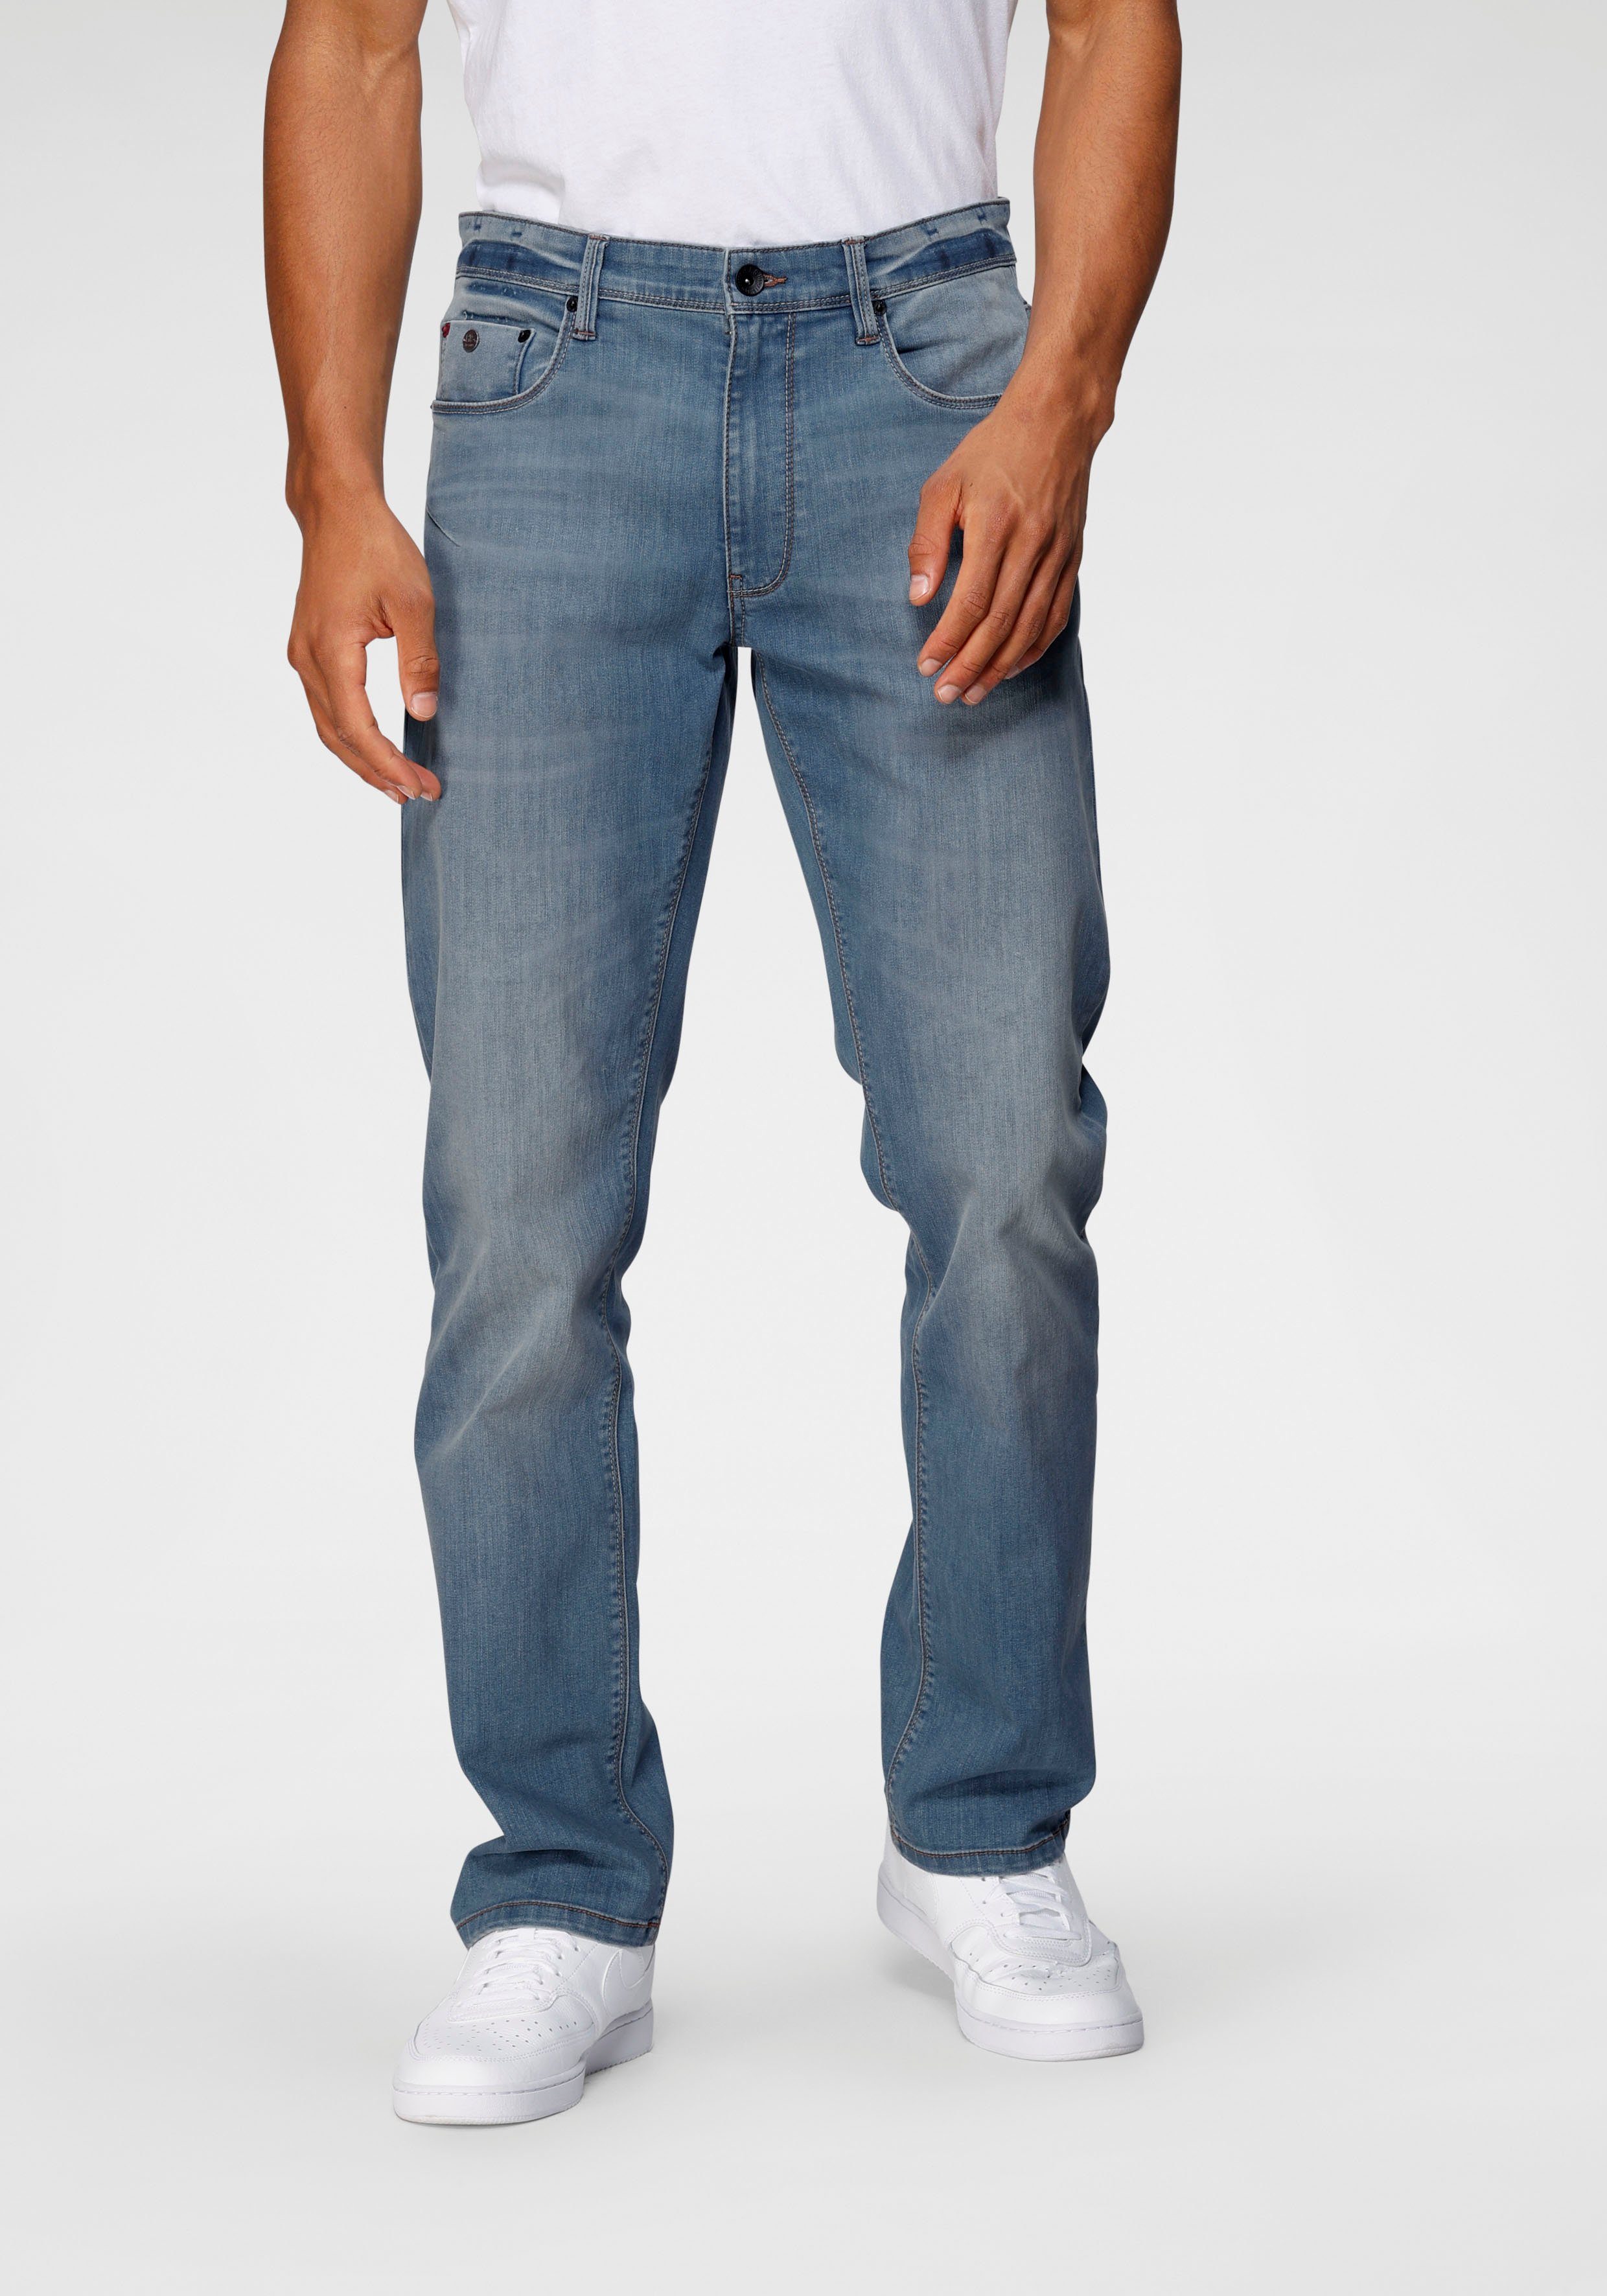 Straight Leg Jeans kaufen » Herren Straight-Fit Jeans | OTTO